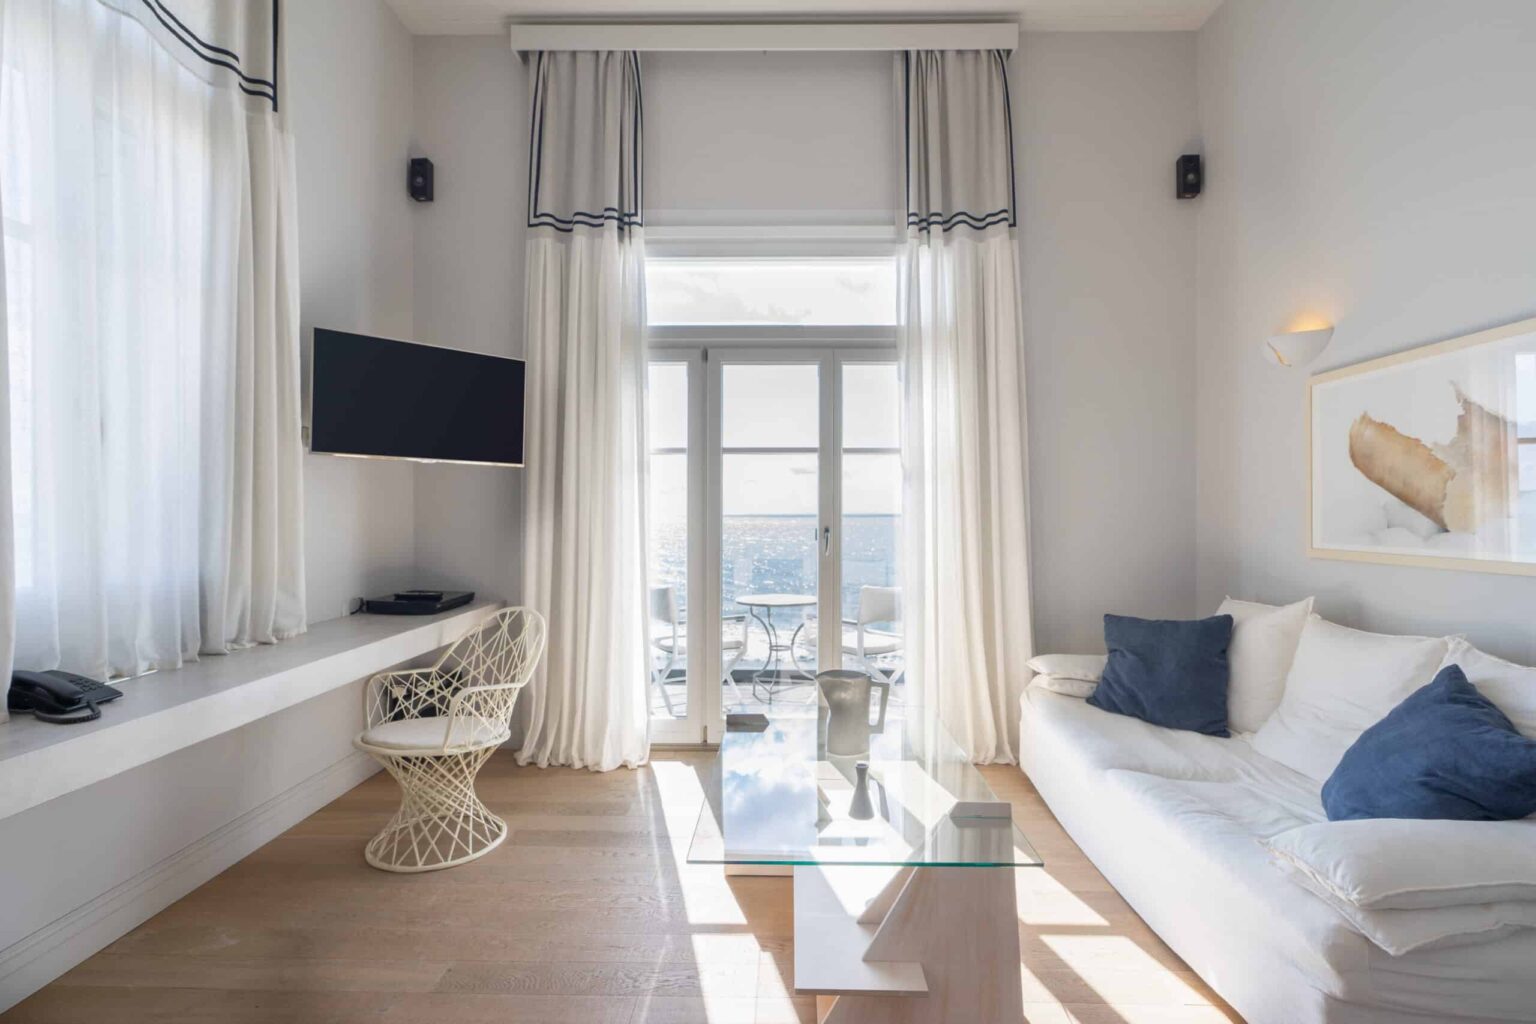 Dexamenes Beachfront Villa’s Suite living area with TV and terrace access